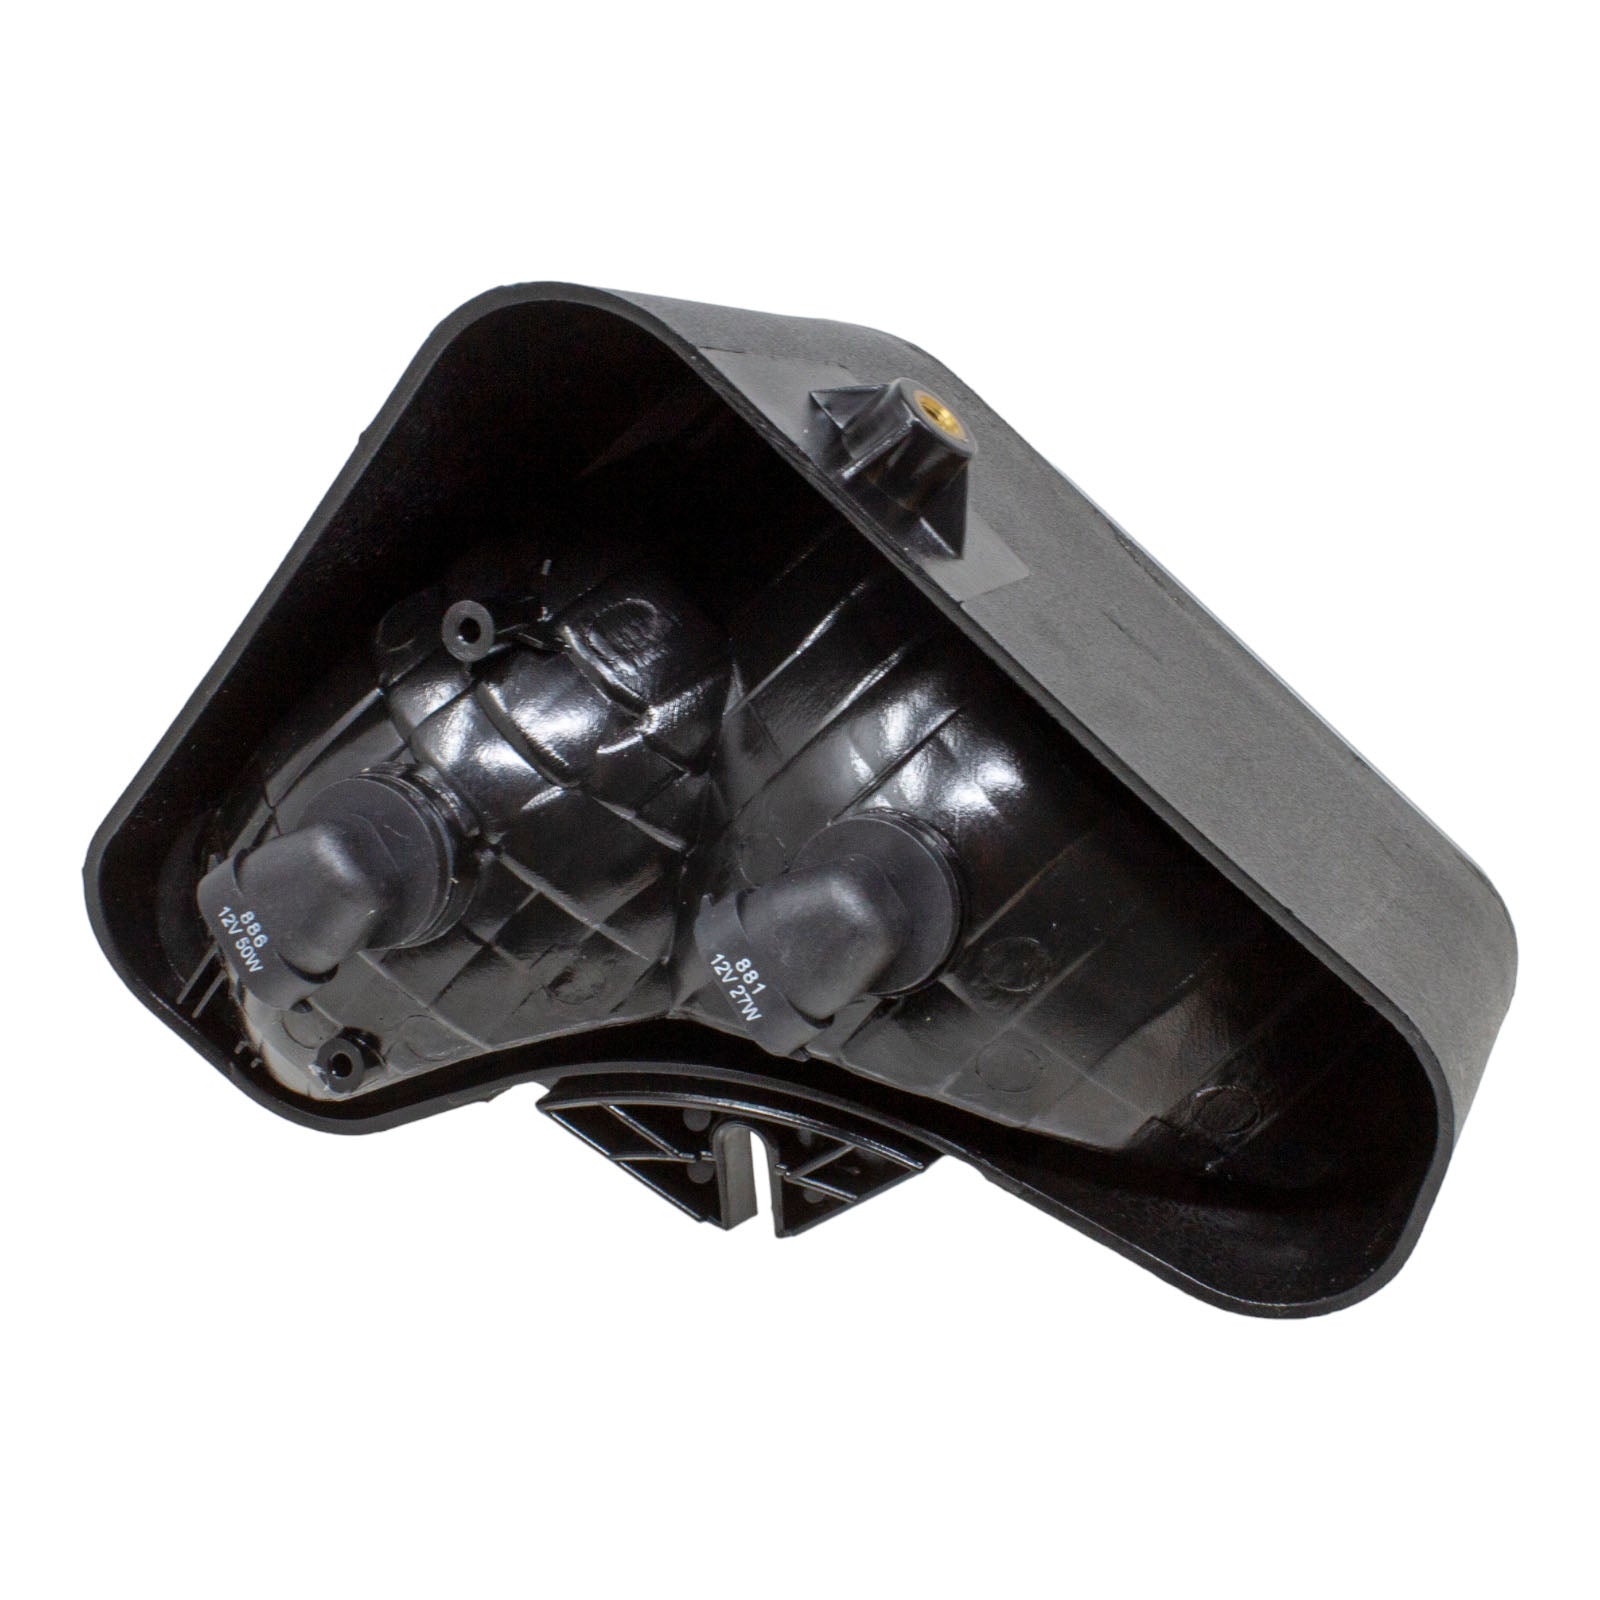 Duraforce 7251340 7251341, Left & Right Headlight Assembly For Bobcat